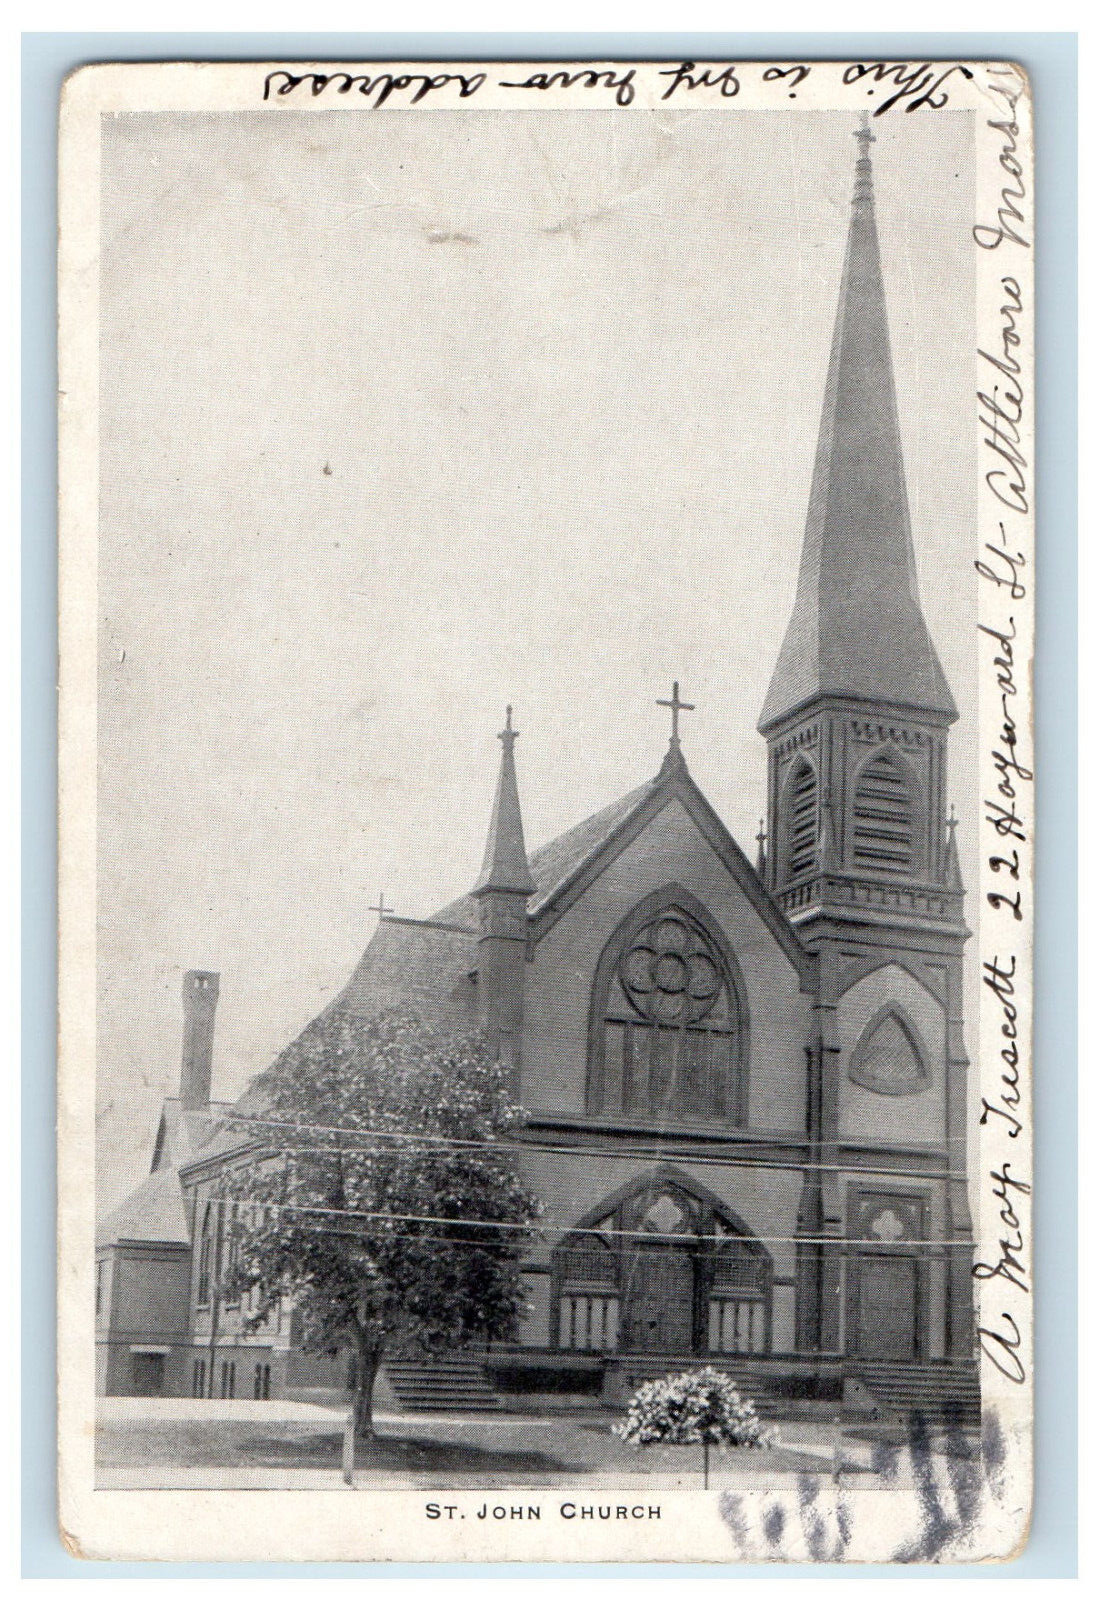 c1900s St. John Church View, Henniker NH PMC Posted Antique Postcard